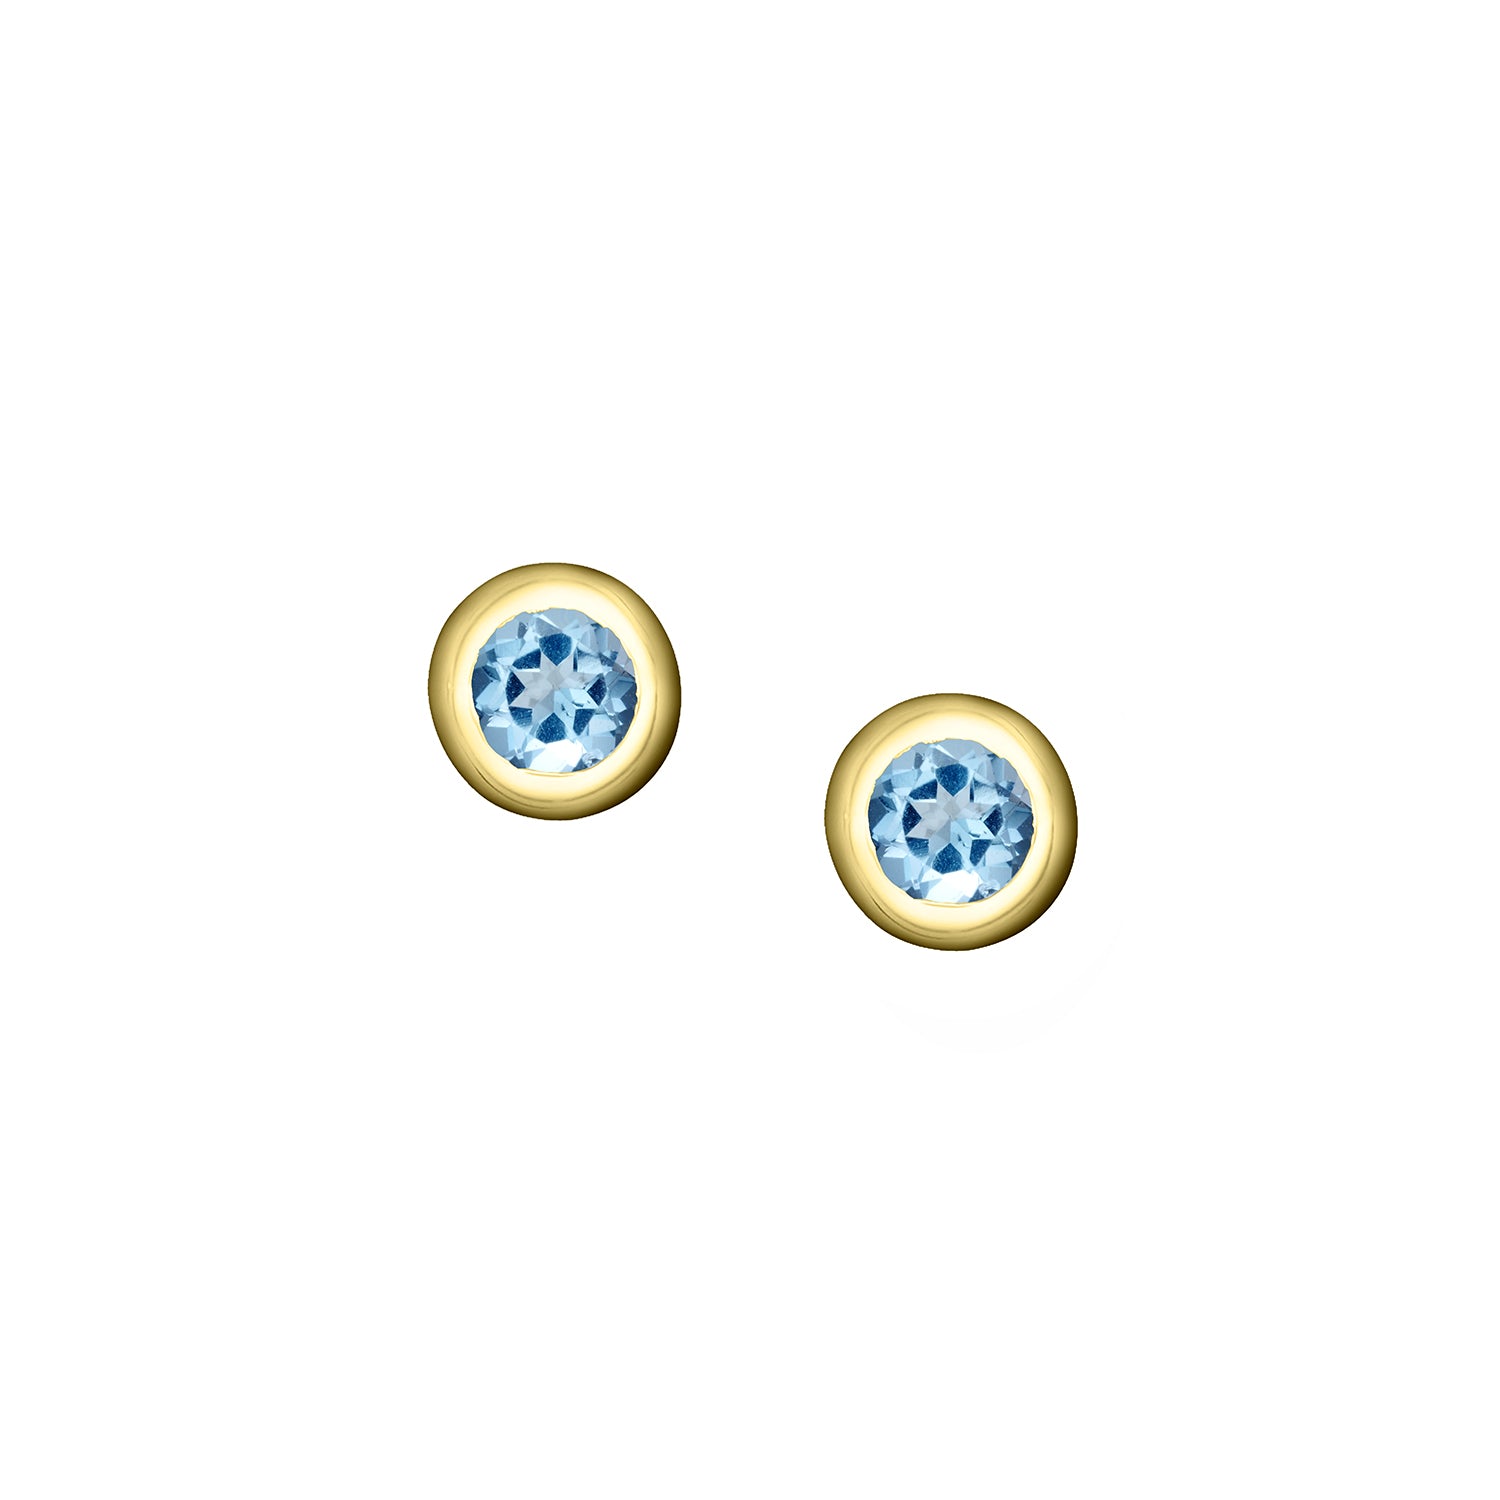 Polished Gold Vermeil Crescent Moon Birthstone Earrings - December / Blue Topaz